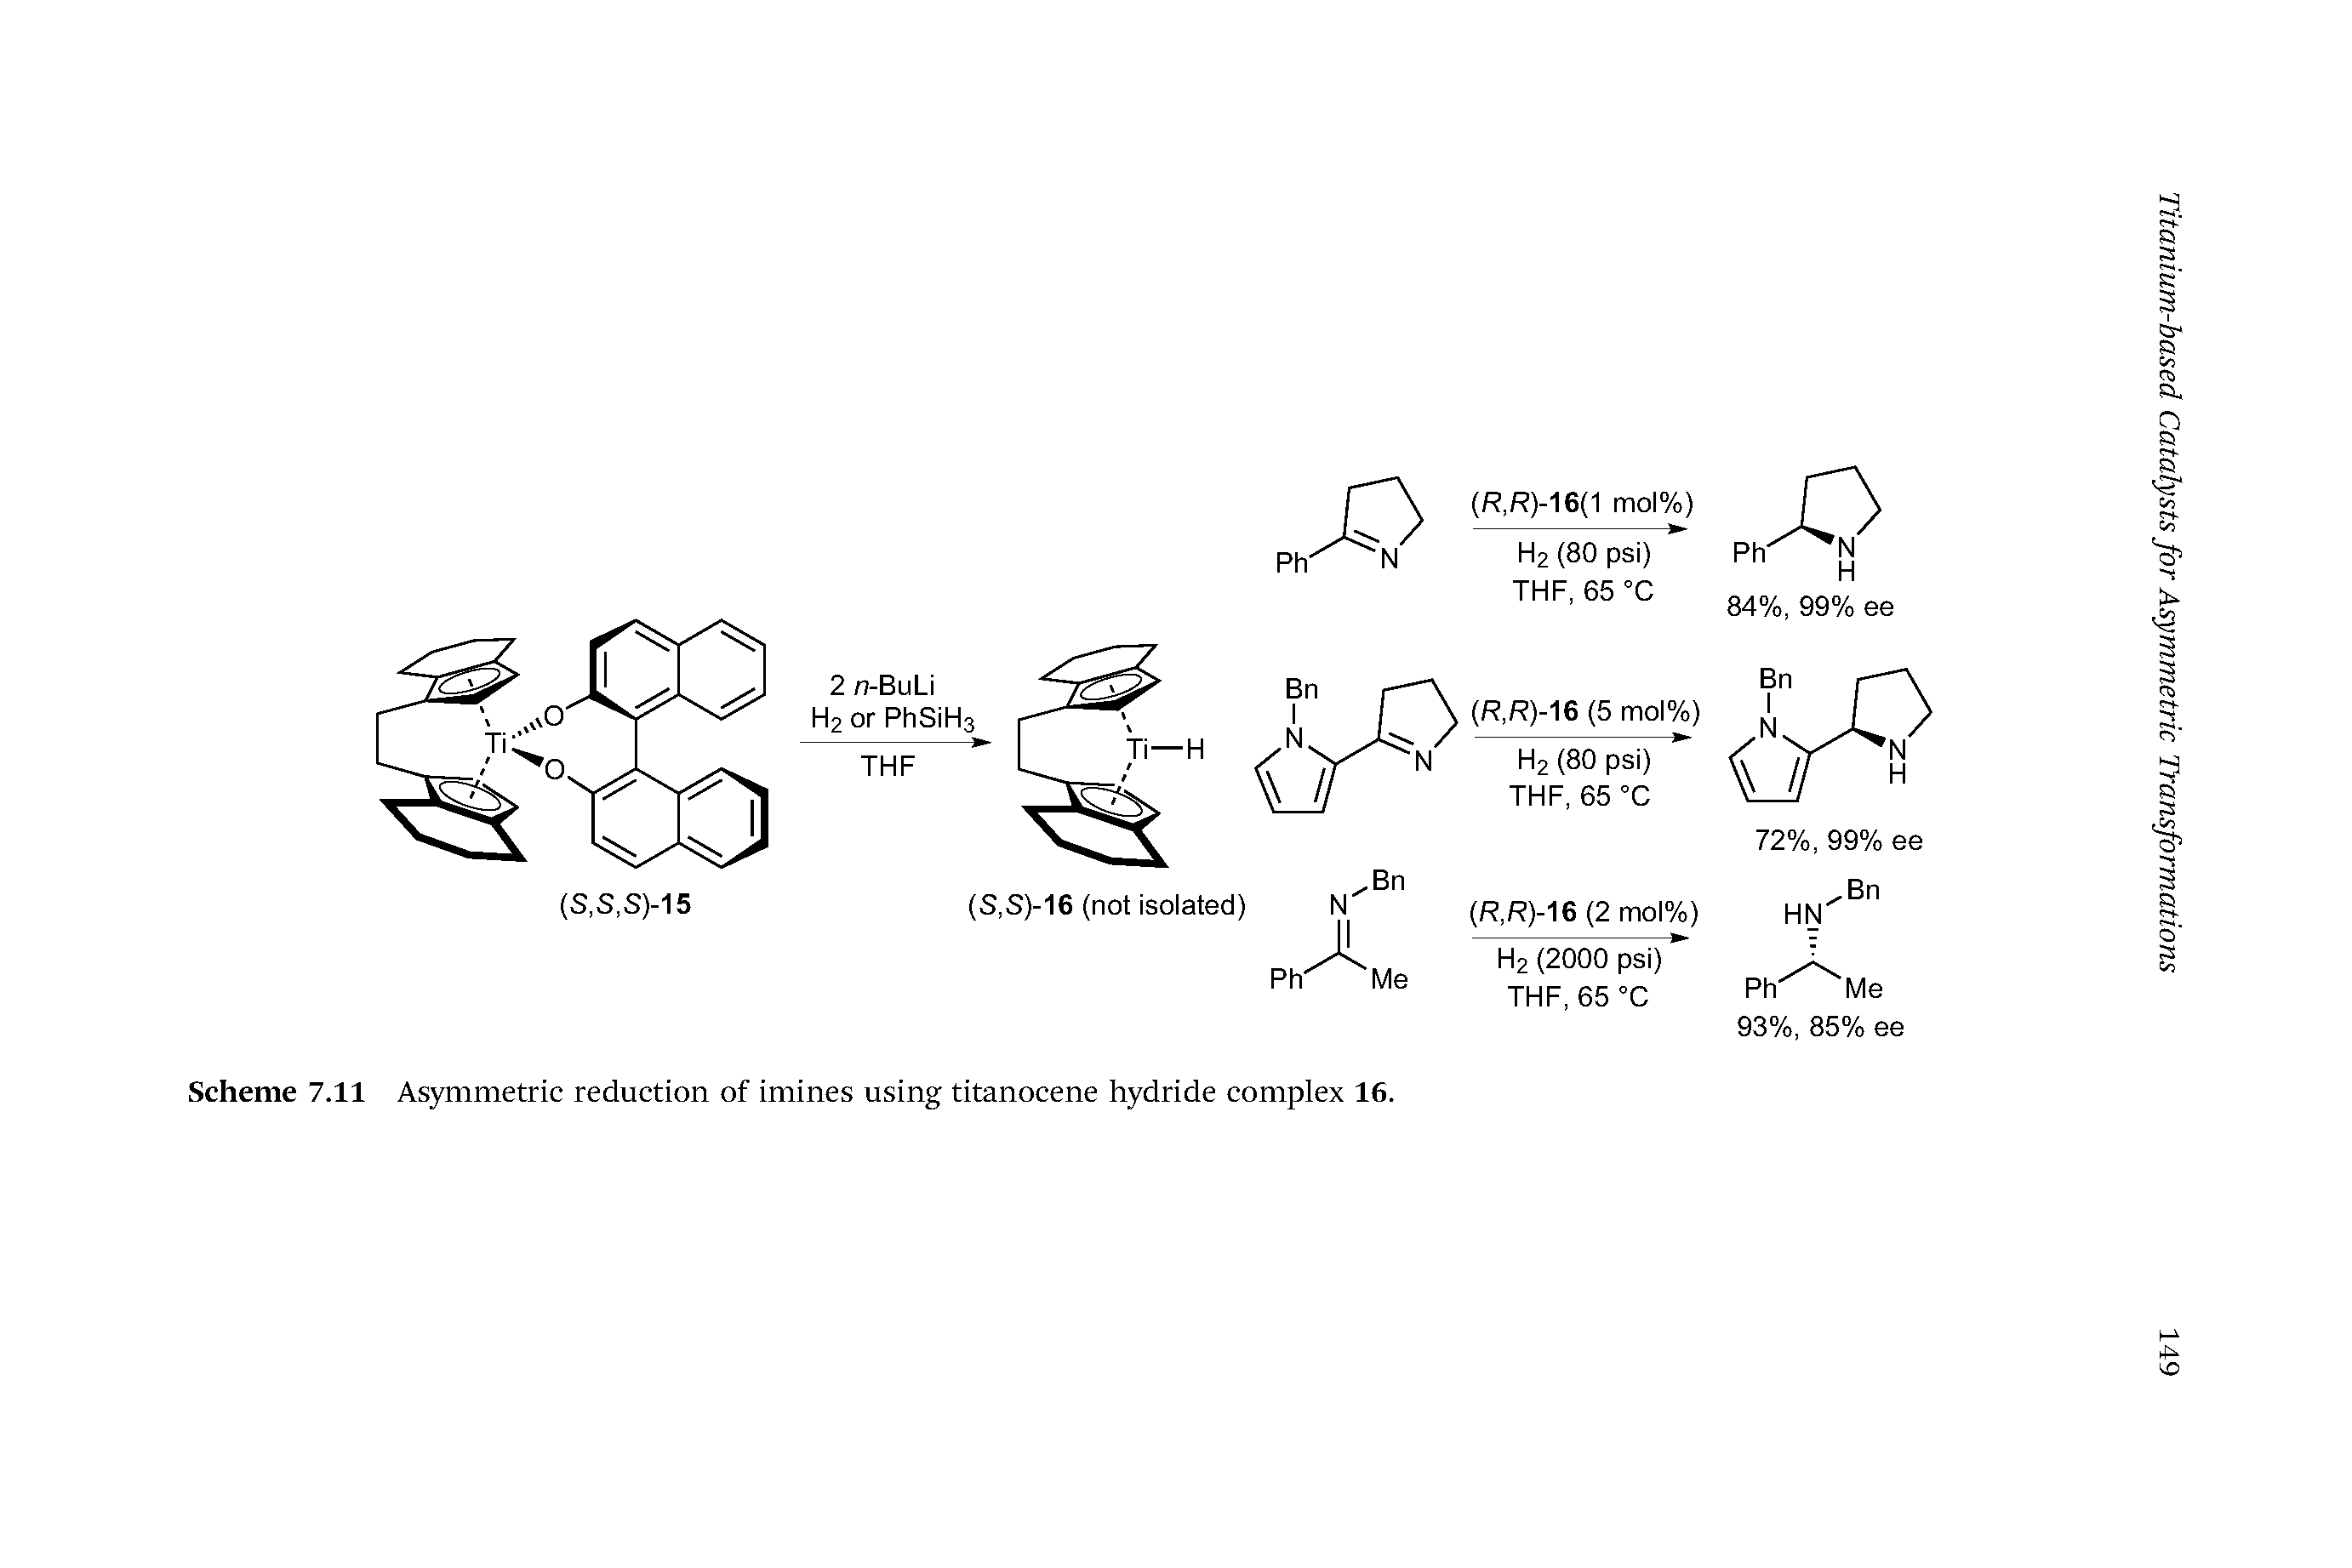 Scheme 7.11 Asymmetric reduction of imines using titanocene hydride complex 16.